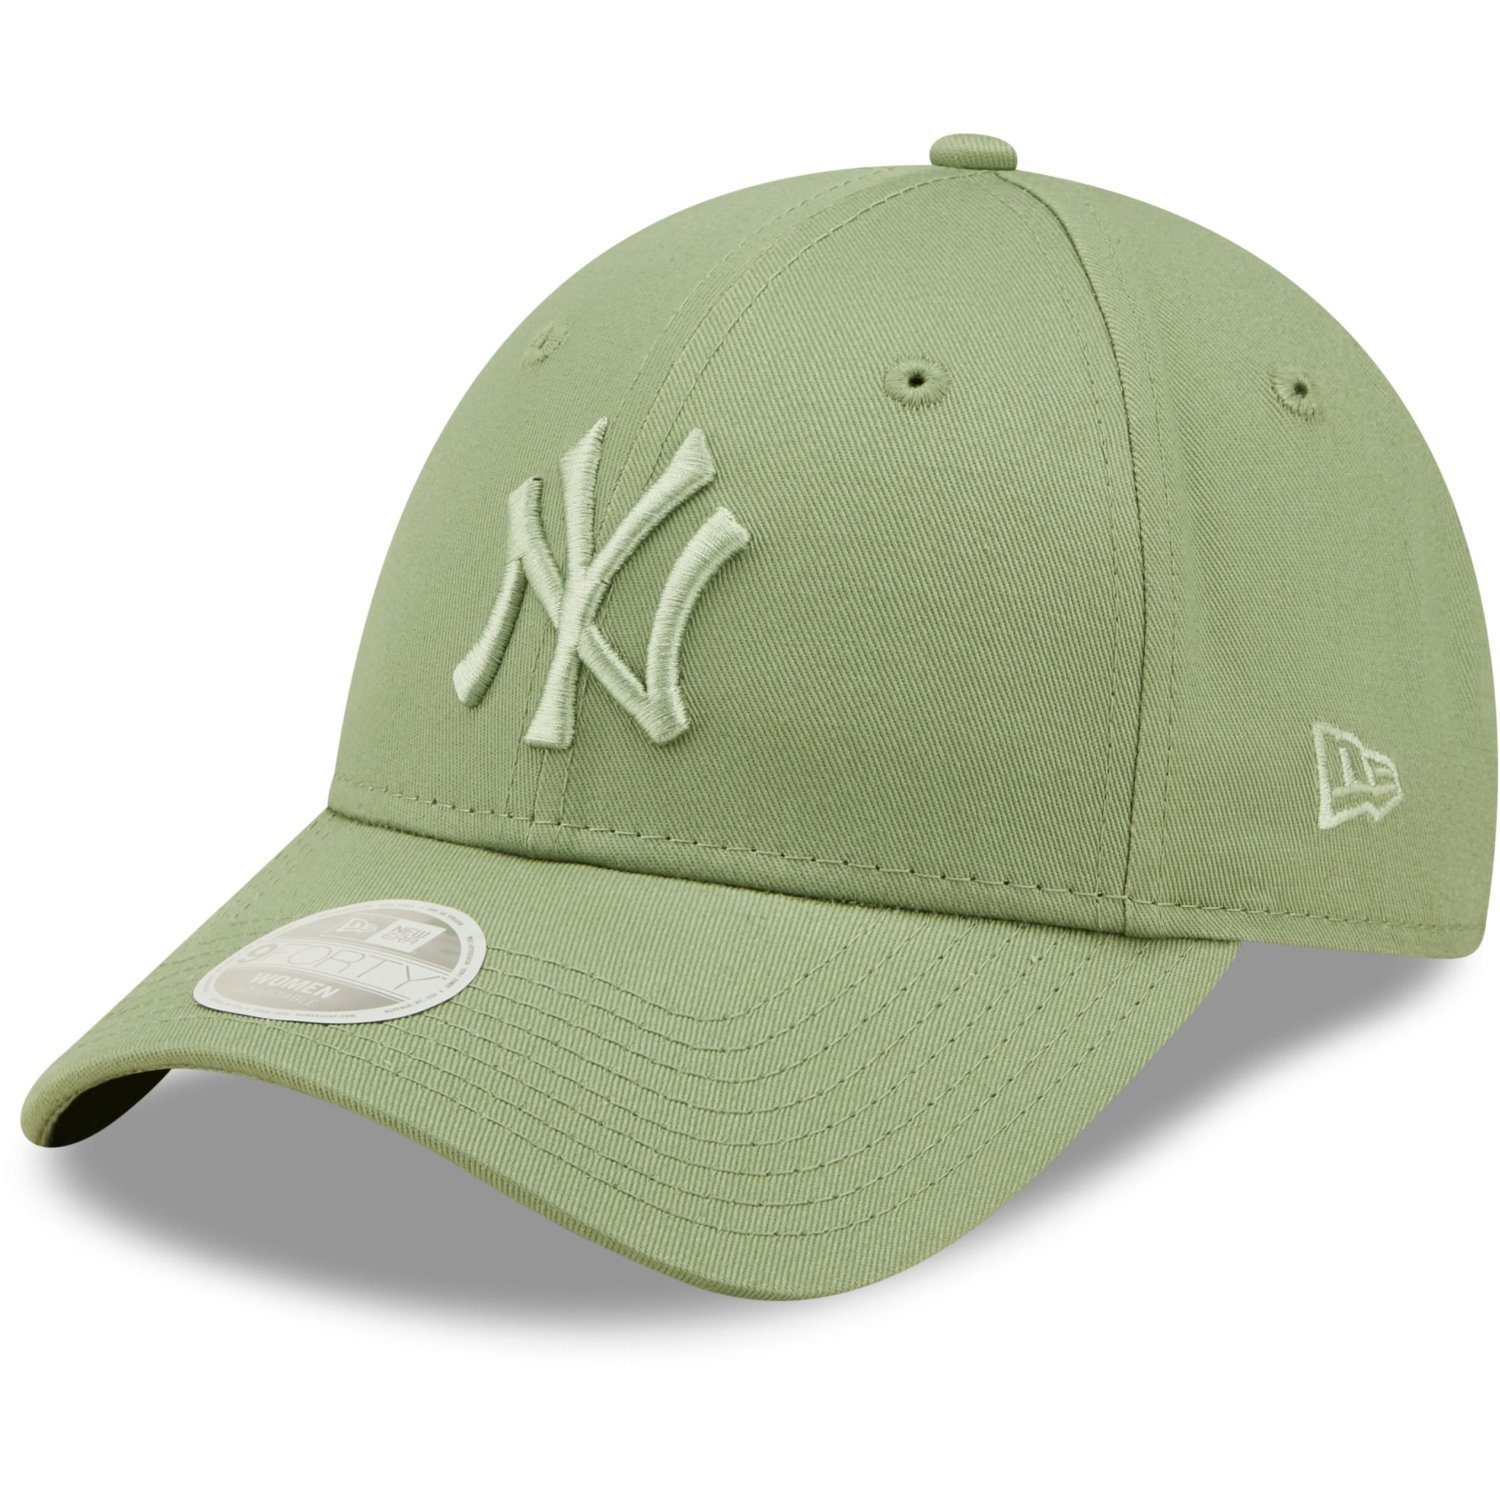 New Era Baseball Cap 9Forty New York Yankees jade mint